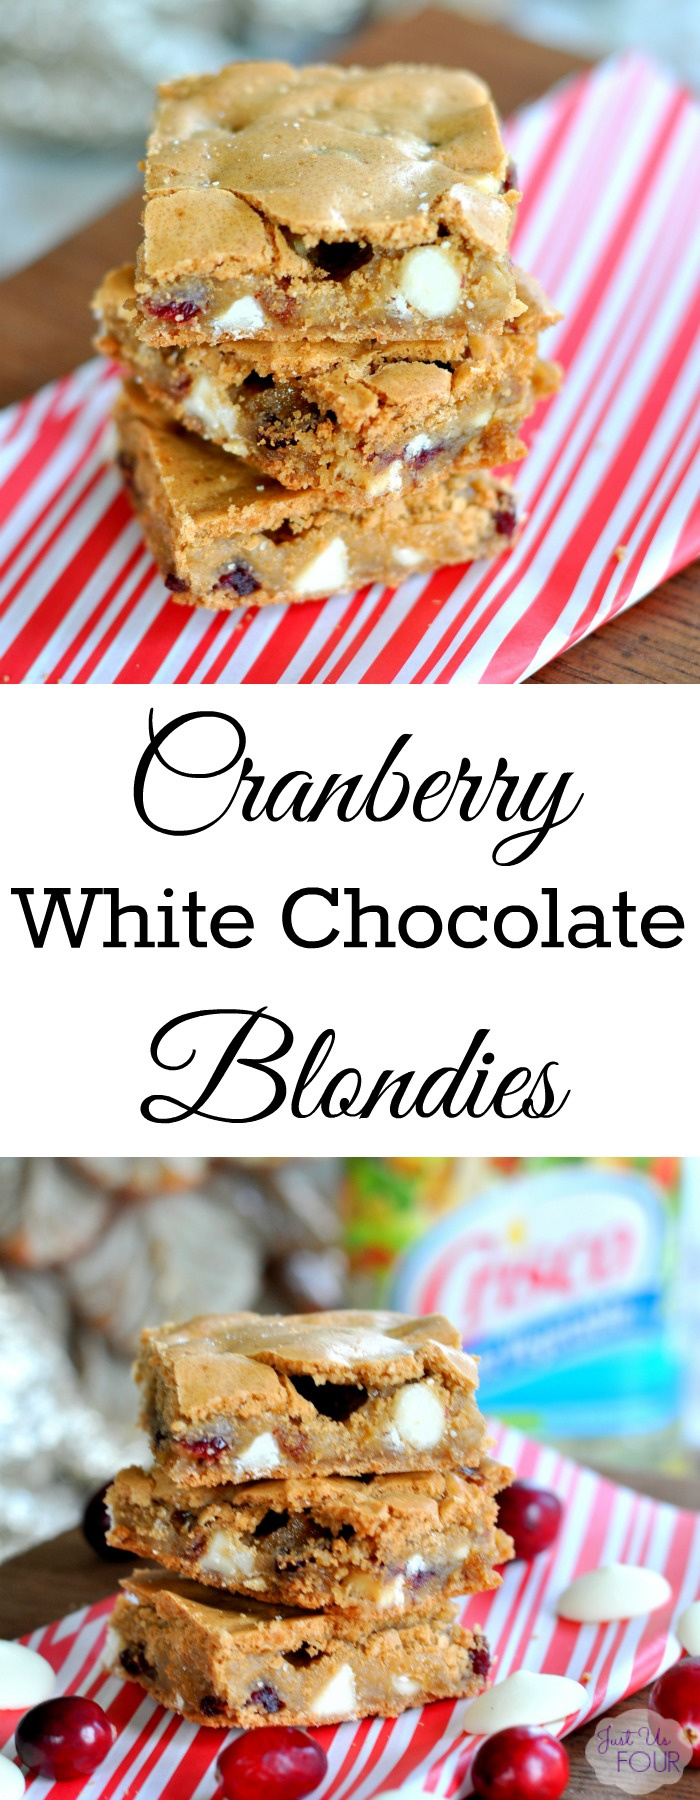 Cranberry White Chocolate Blondies